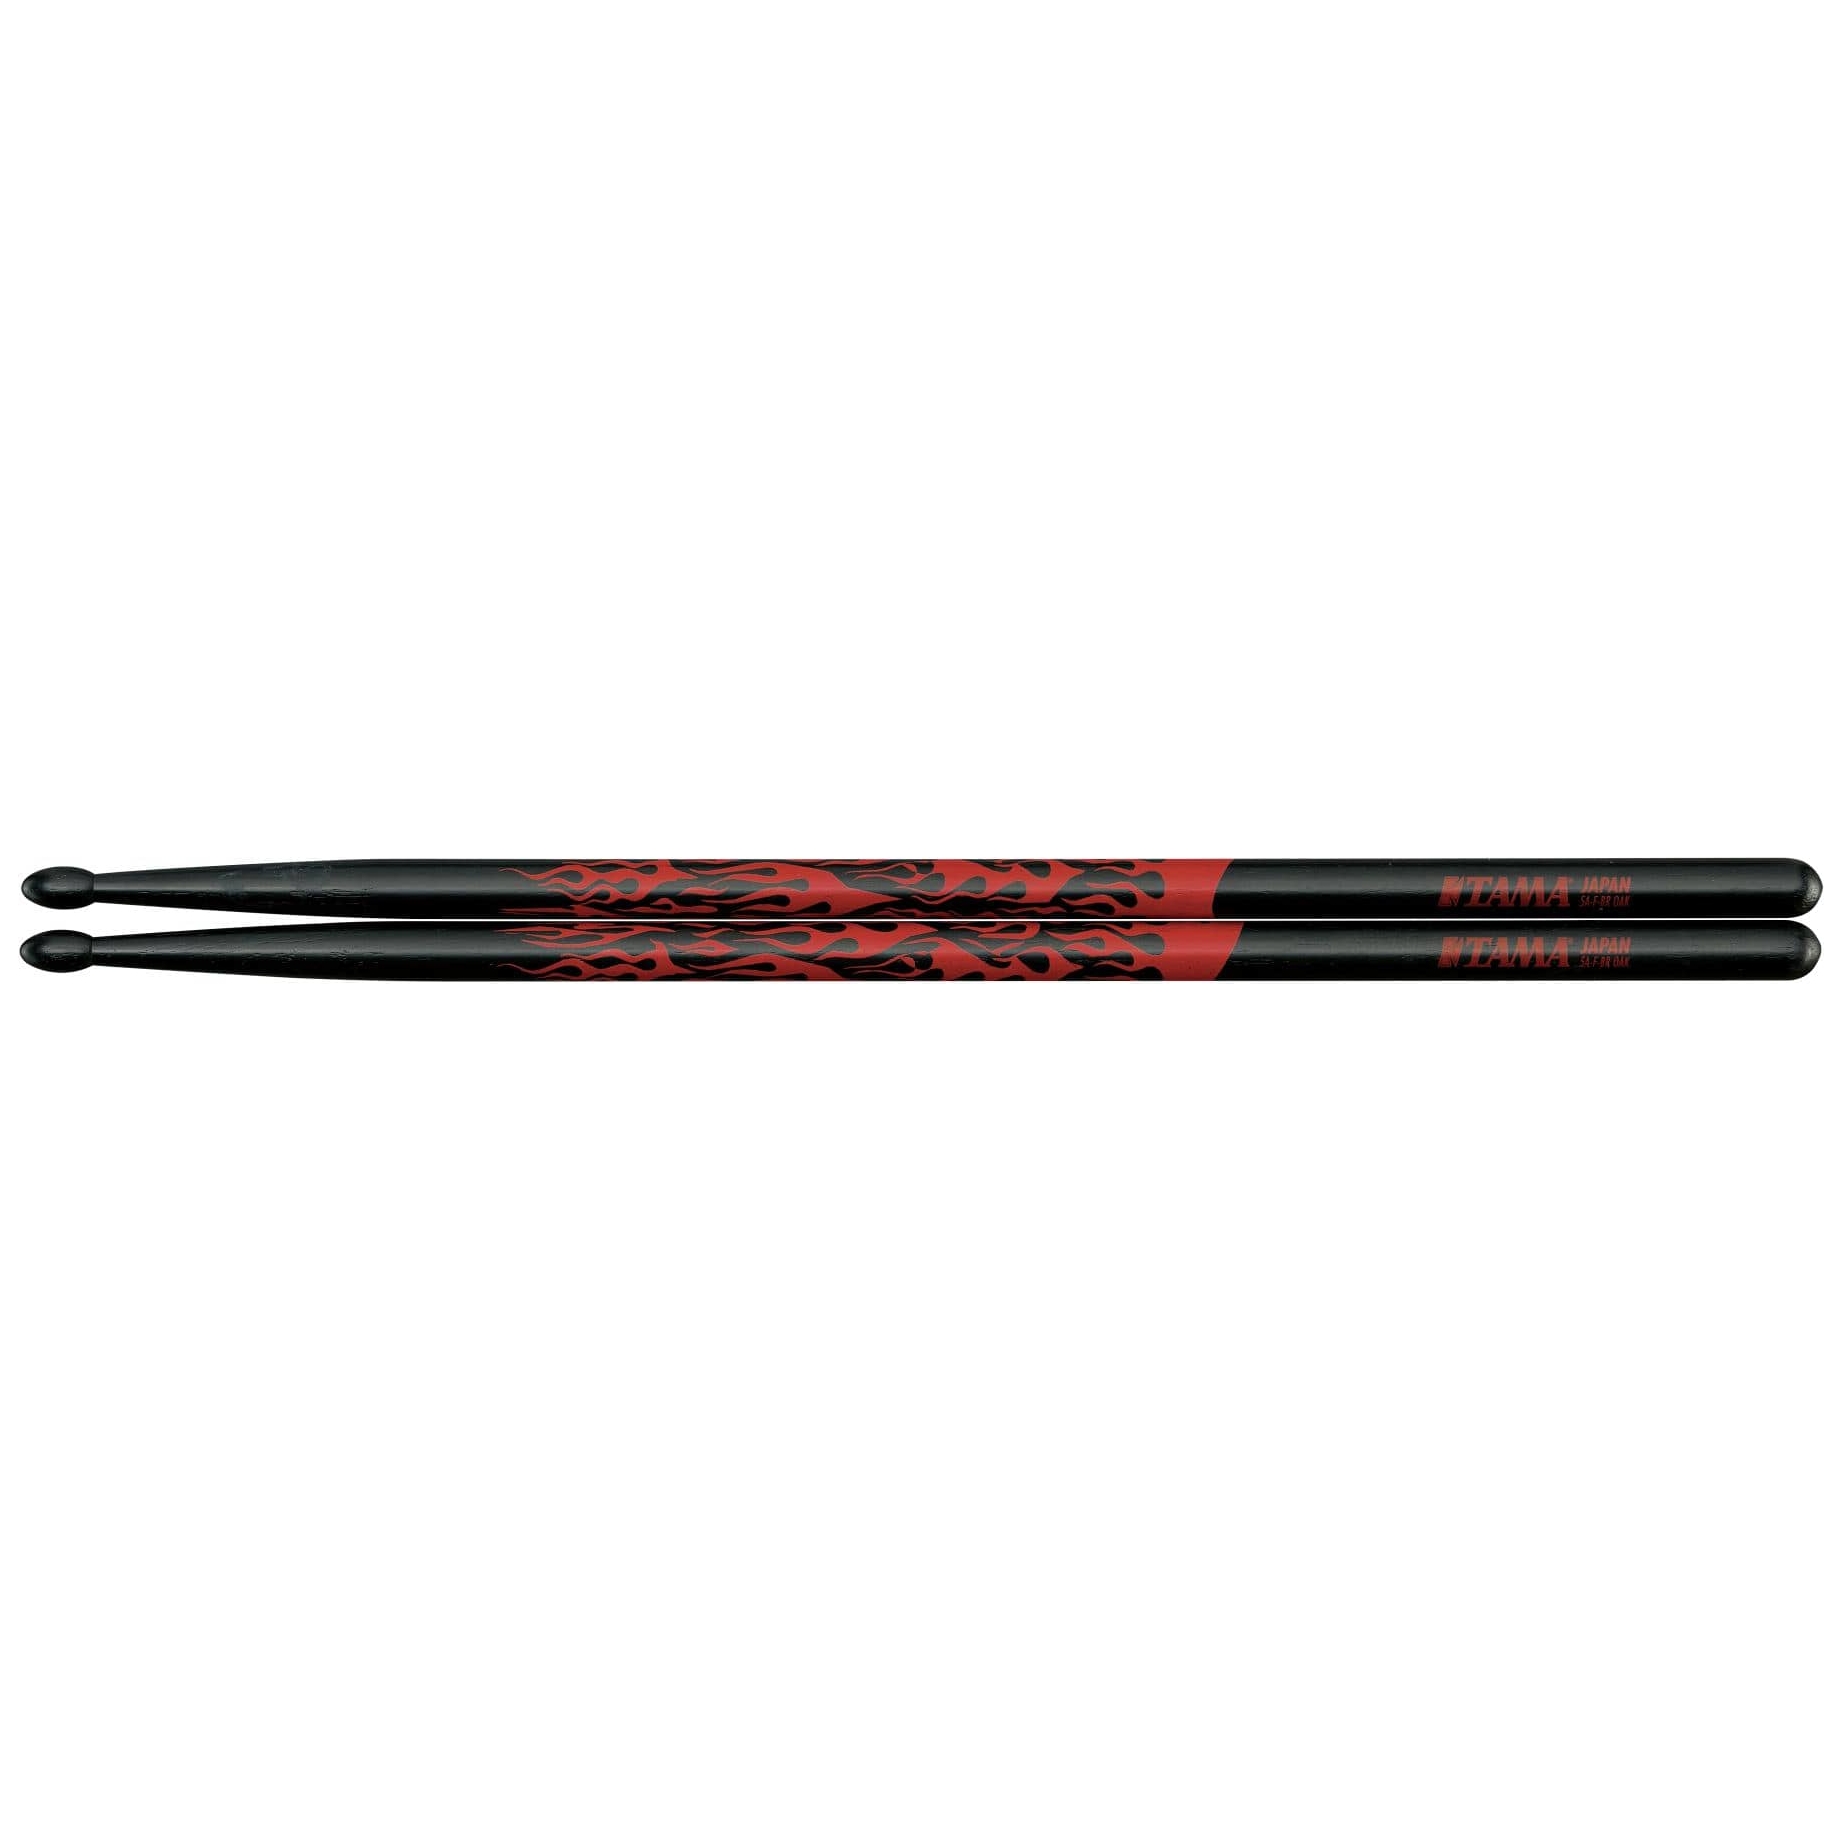 Tama TAMA-O5A-F-BR Rhythmic Fire Drumsticks - 5A-F-BR - Black, Red Pattern